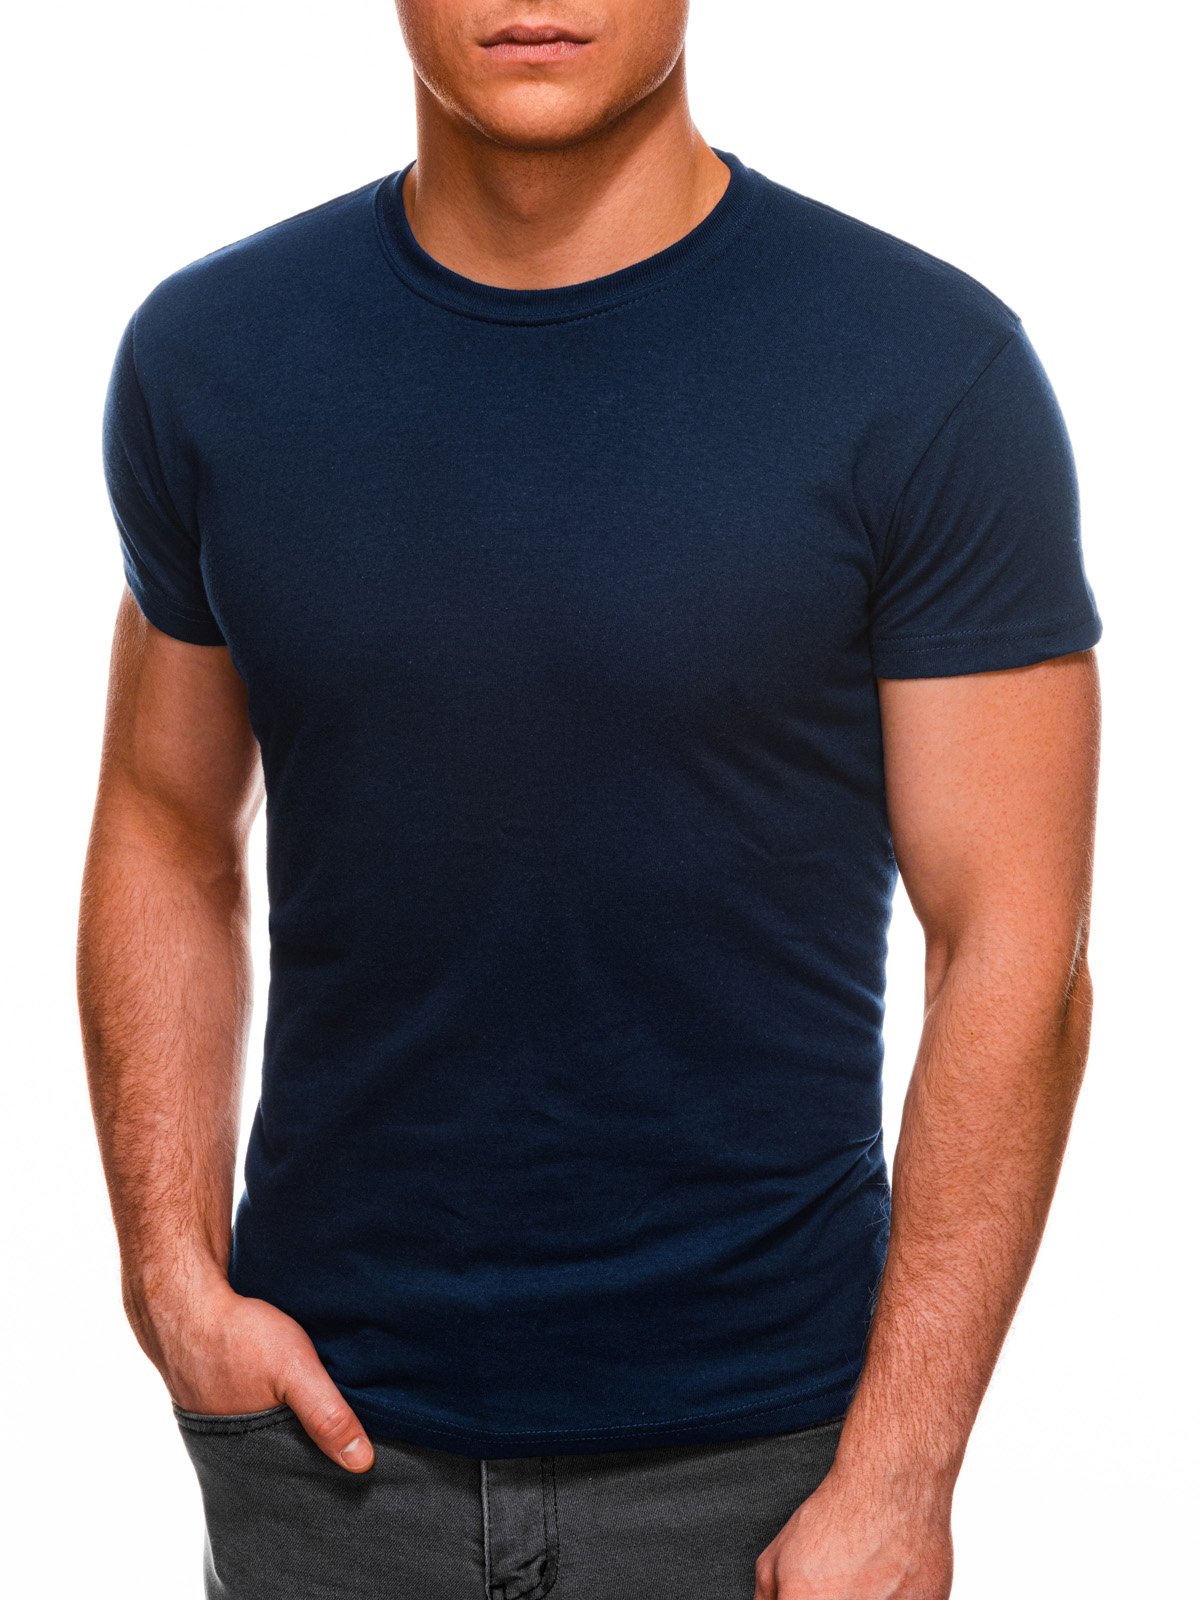 Men S Plain T Shirt S970 Navy Modone Wholesale Clothing For Men